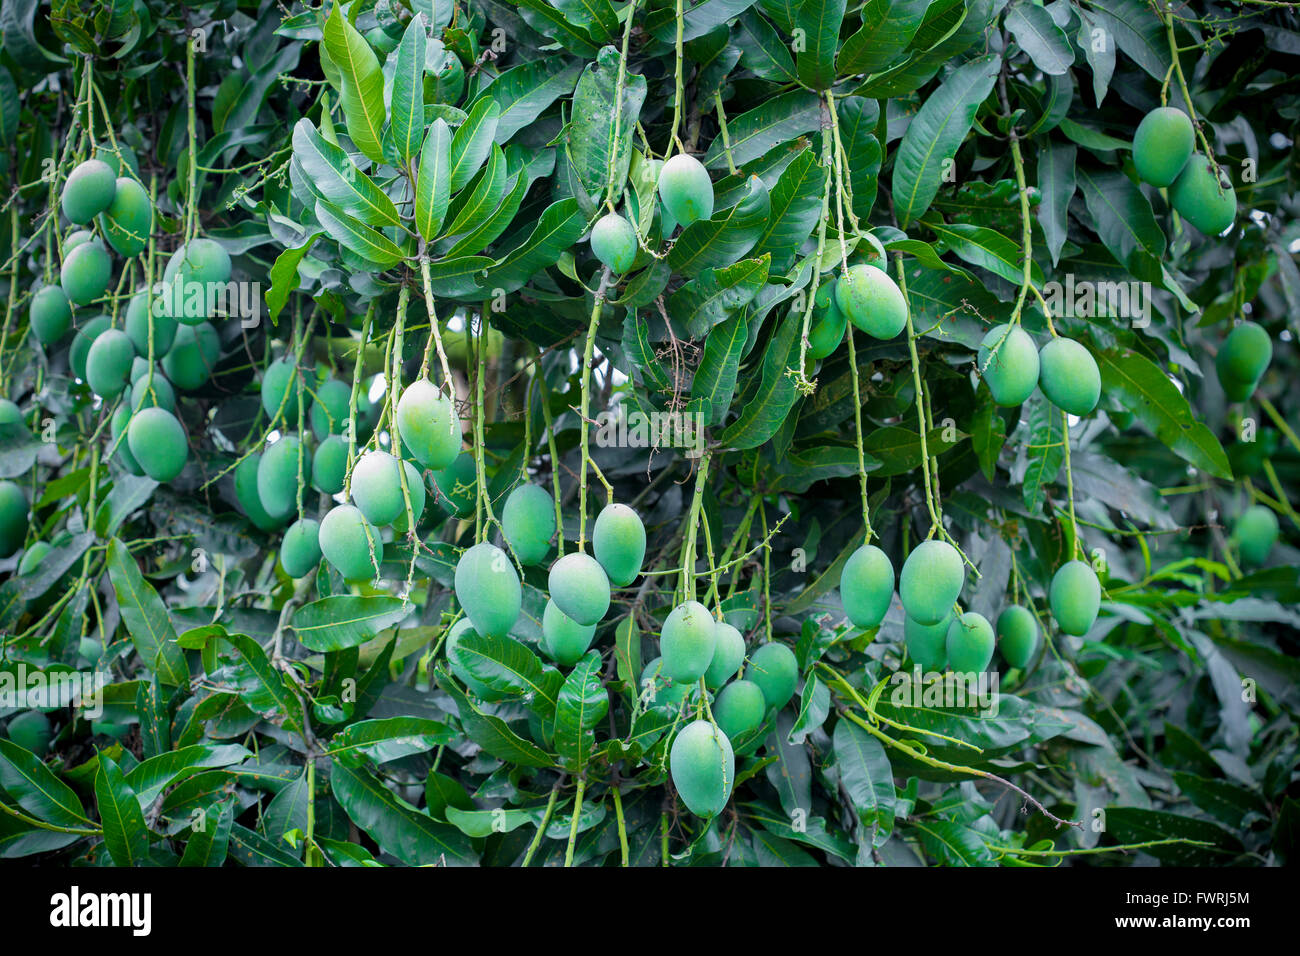 Some Mango growing on tree in areas district of Thakurgong, Bangladesh. ©  Jahangir Alam Onuchcha/Alamy Stock Photo - Alamy